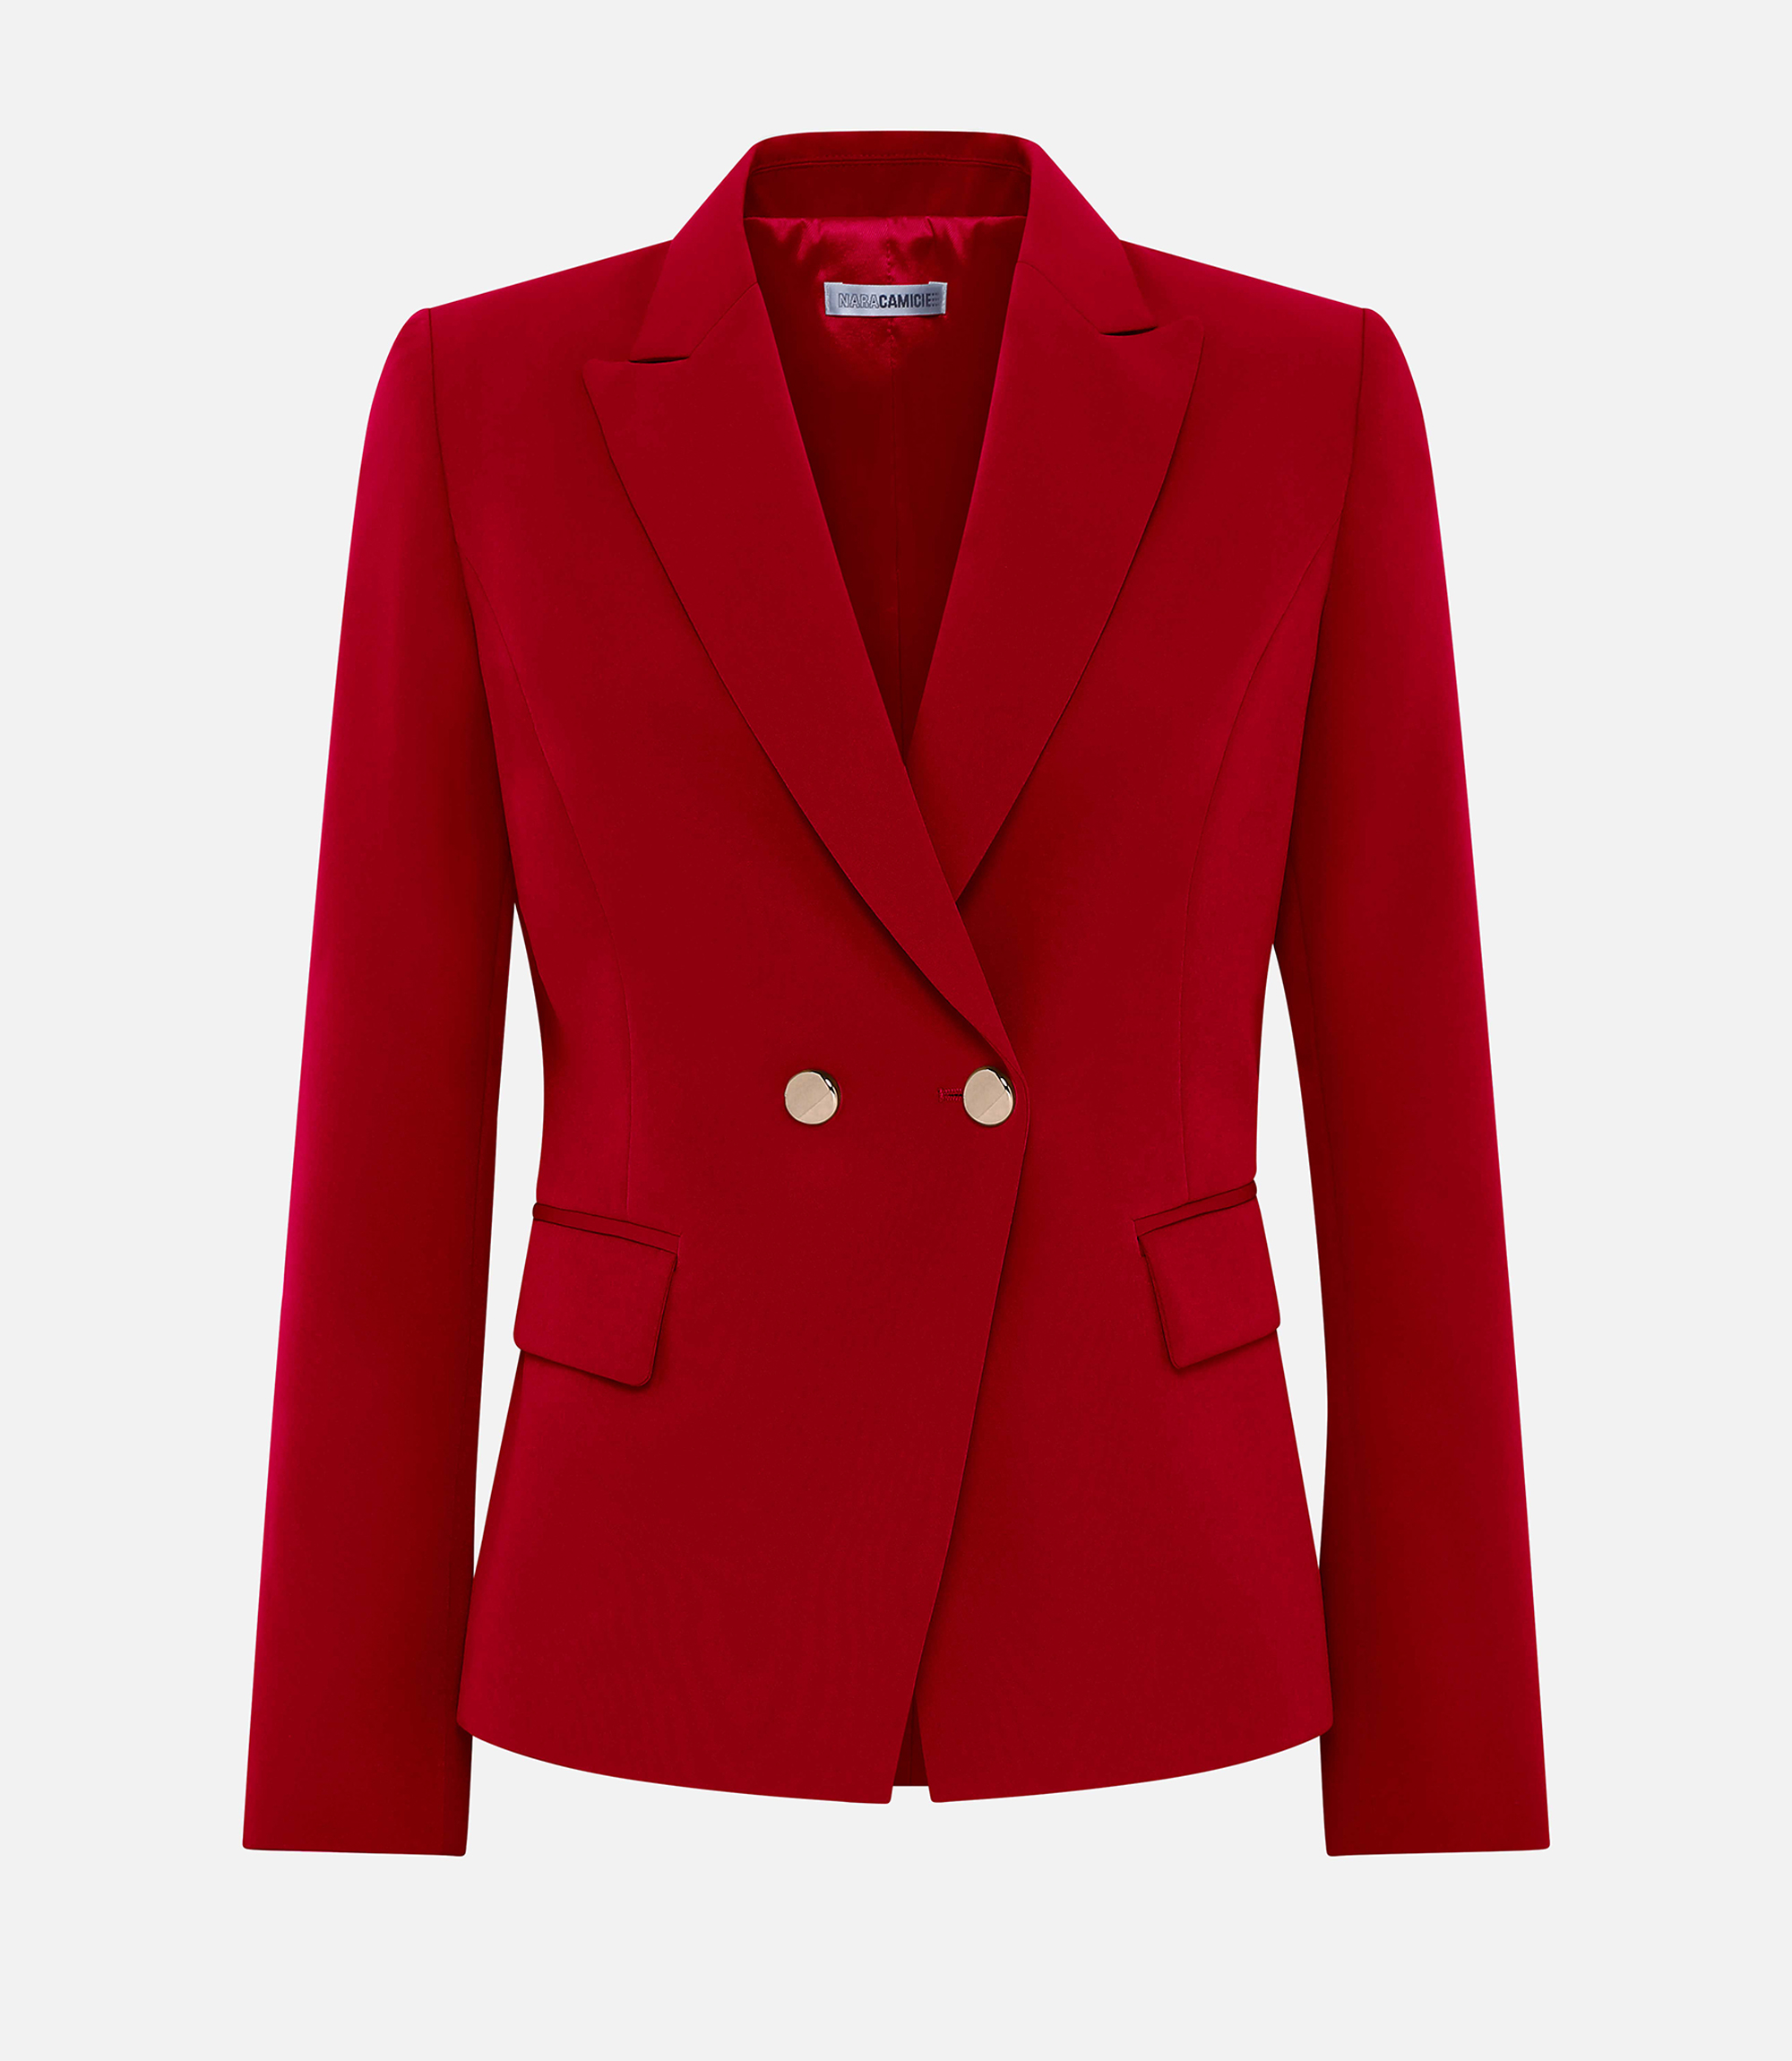 Double breasted jacket - Red - Nara Milano